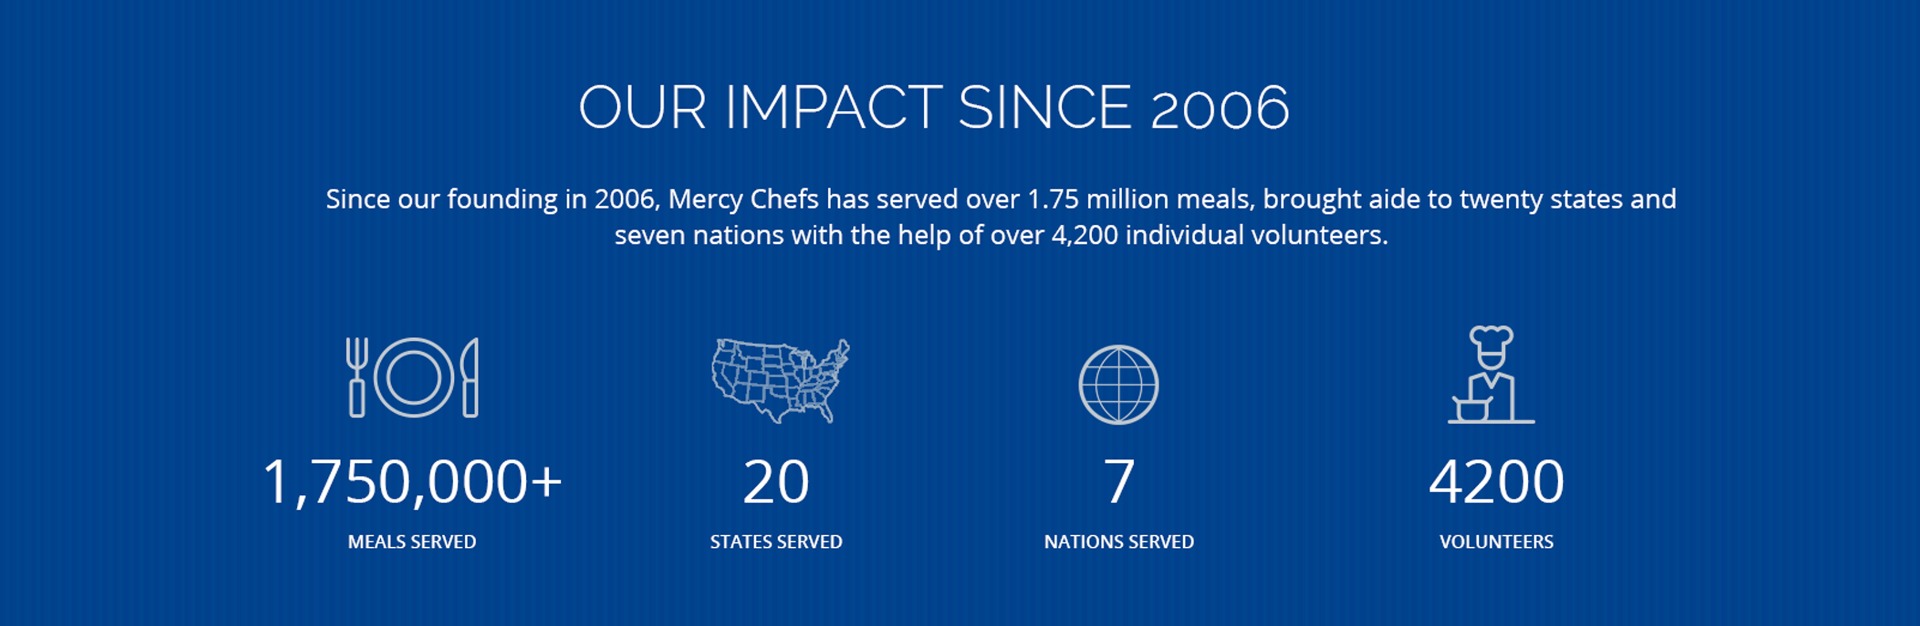 1,750,000+ meal served, 20 states served, 7 nations served, 4200 volunteers